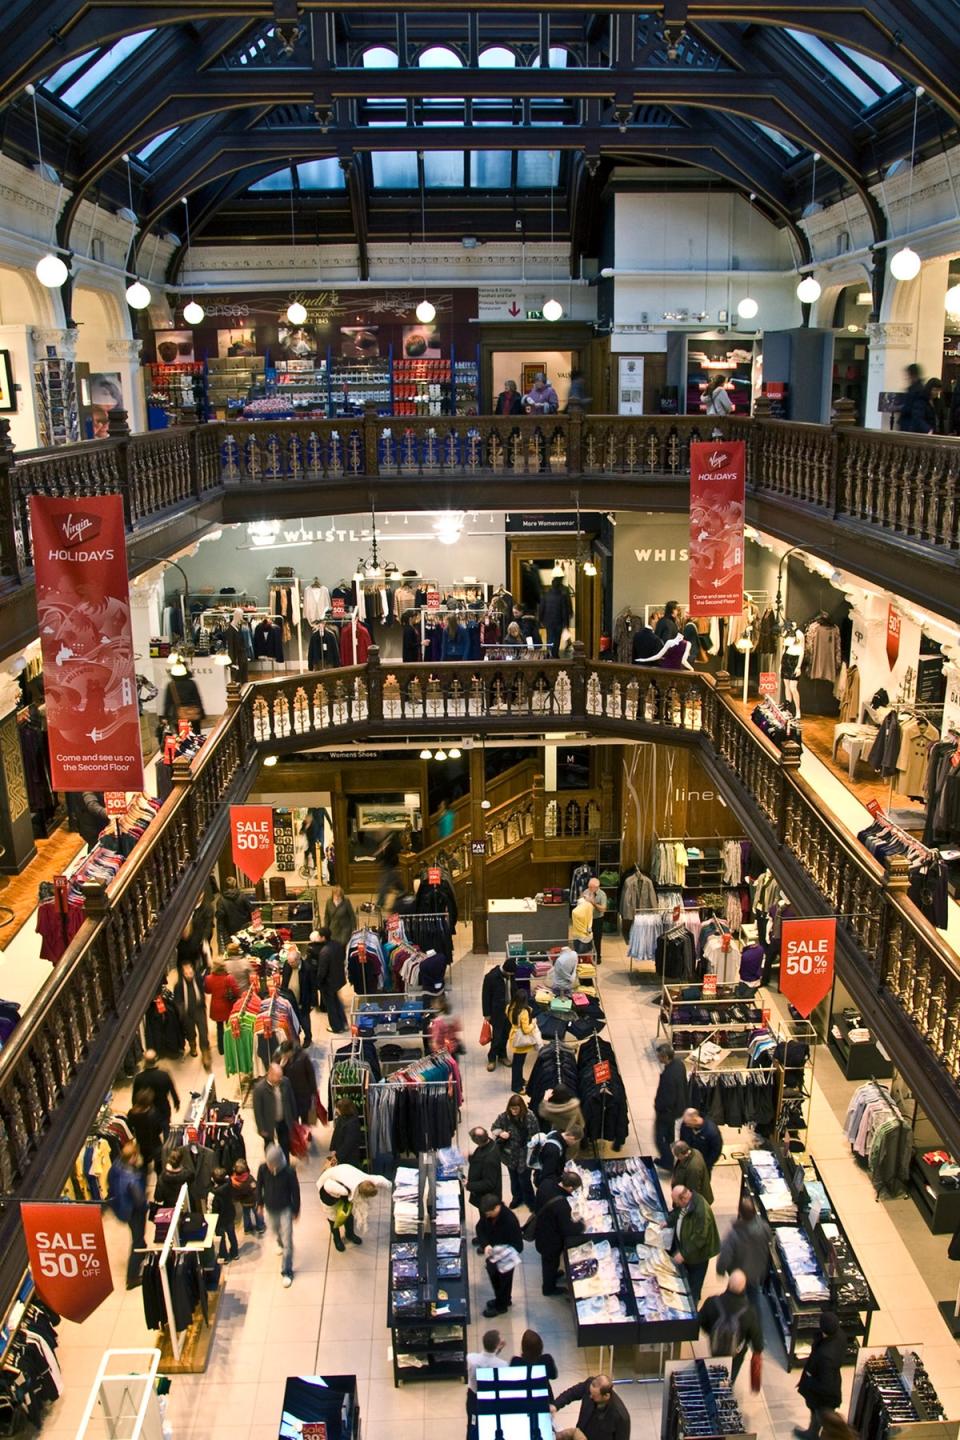 Jenners boasted an impressive array of shops over multiple floors (Roz Sheffield via Flickr)